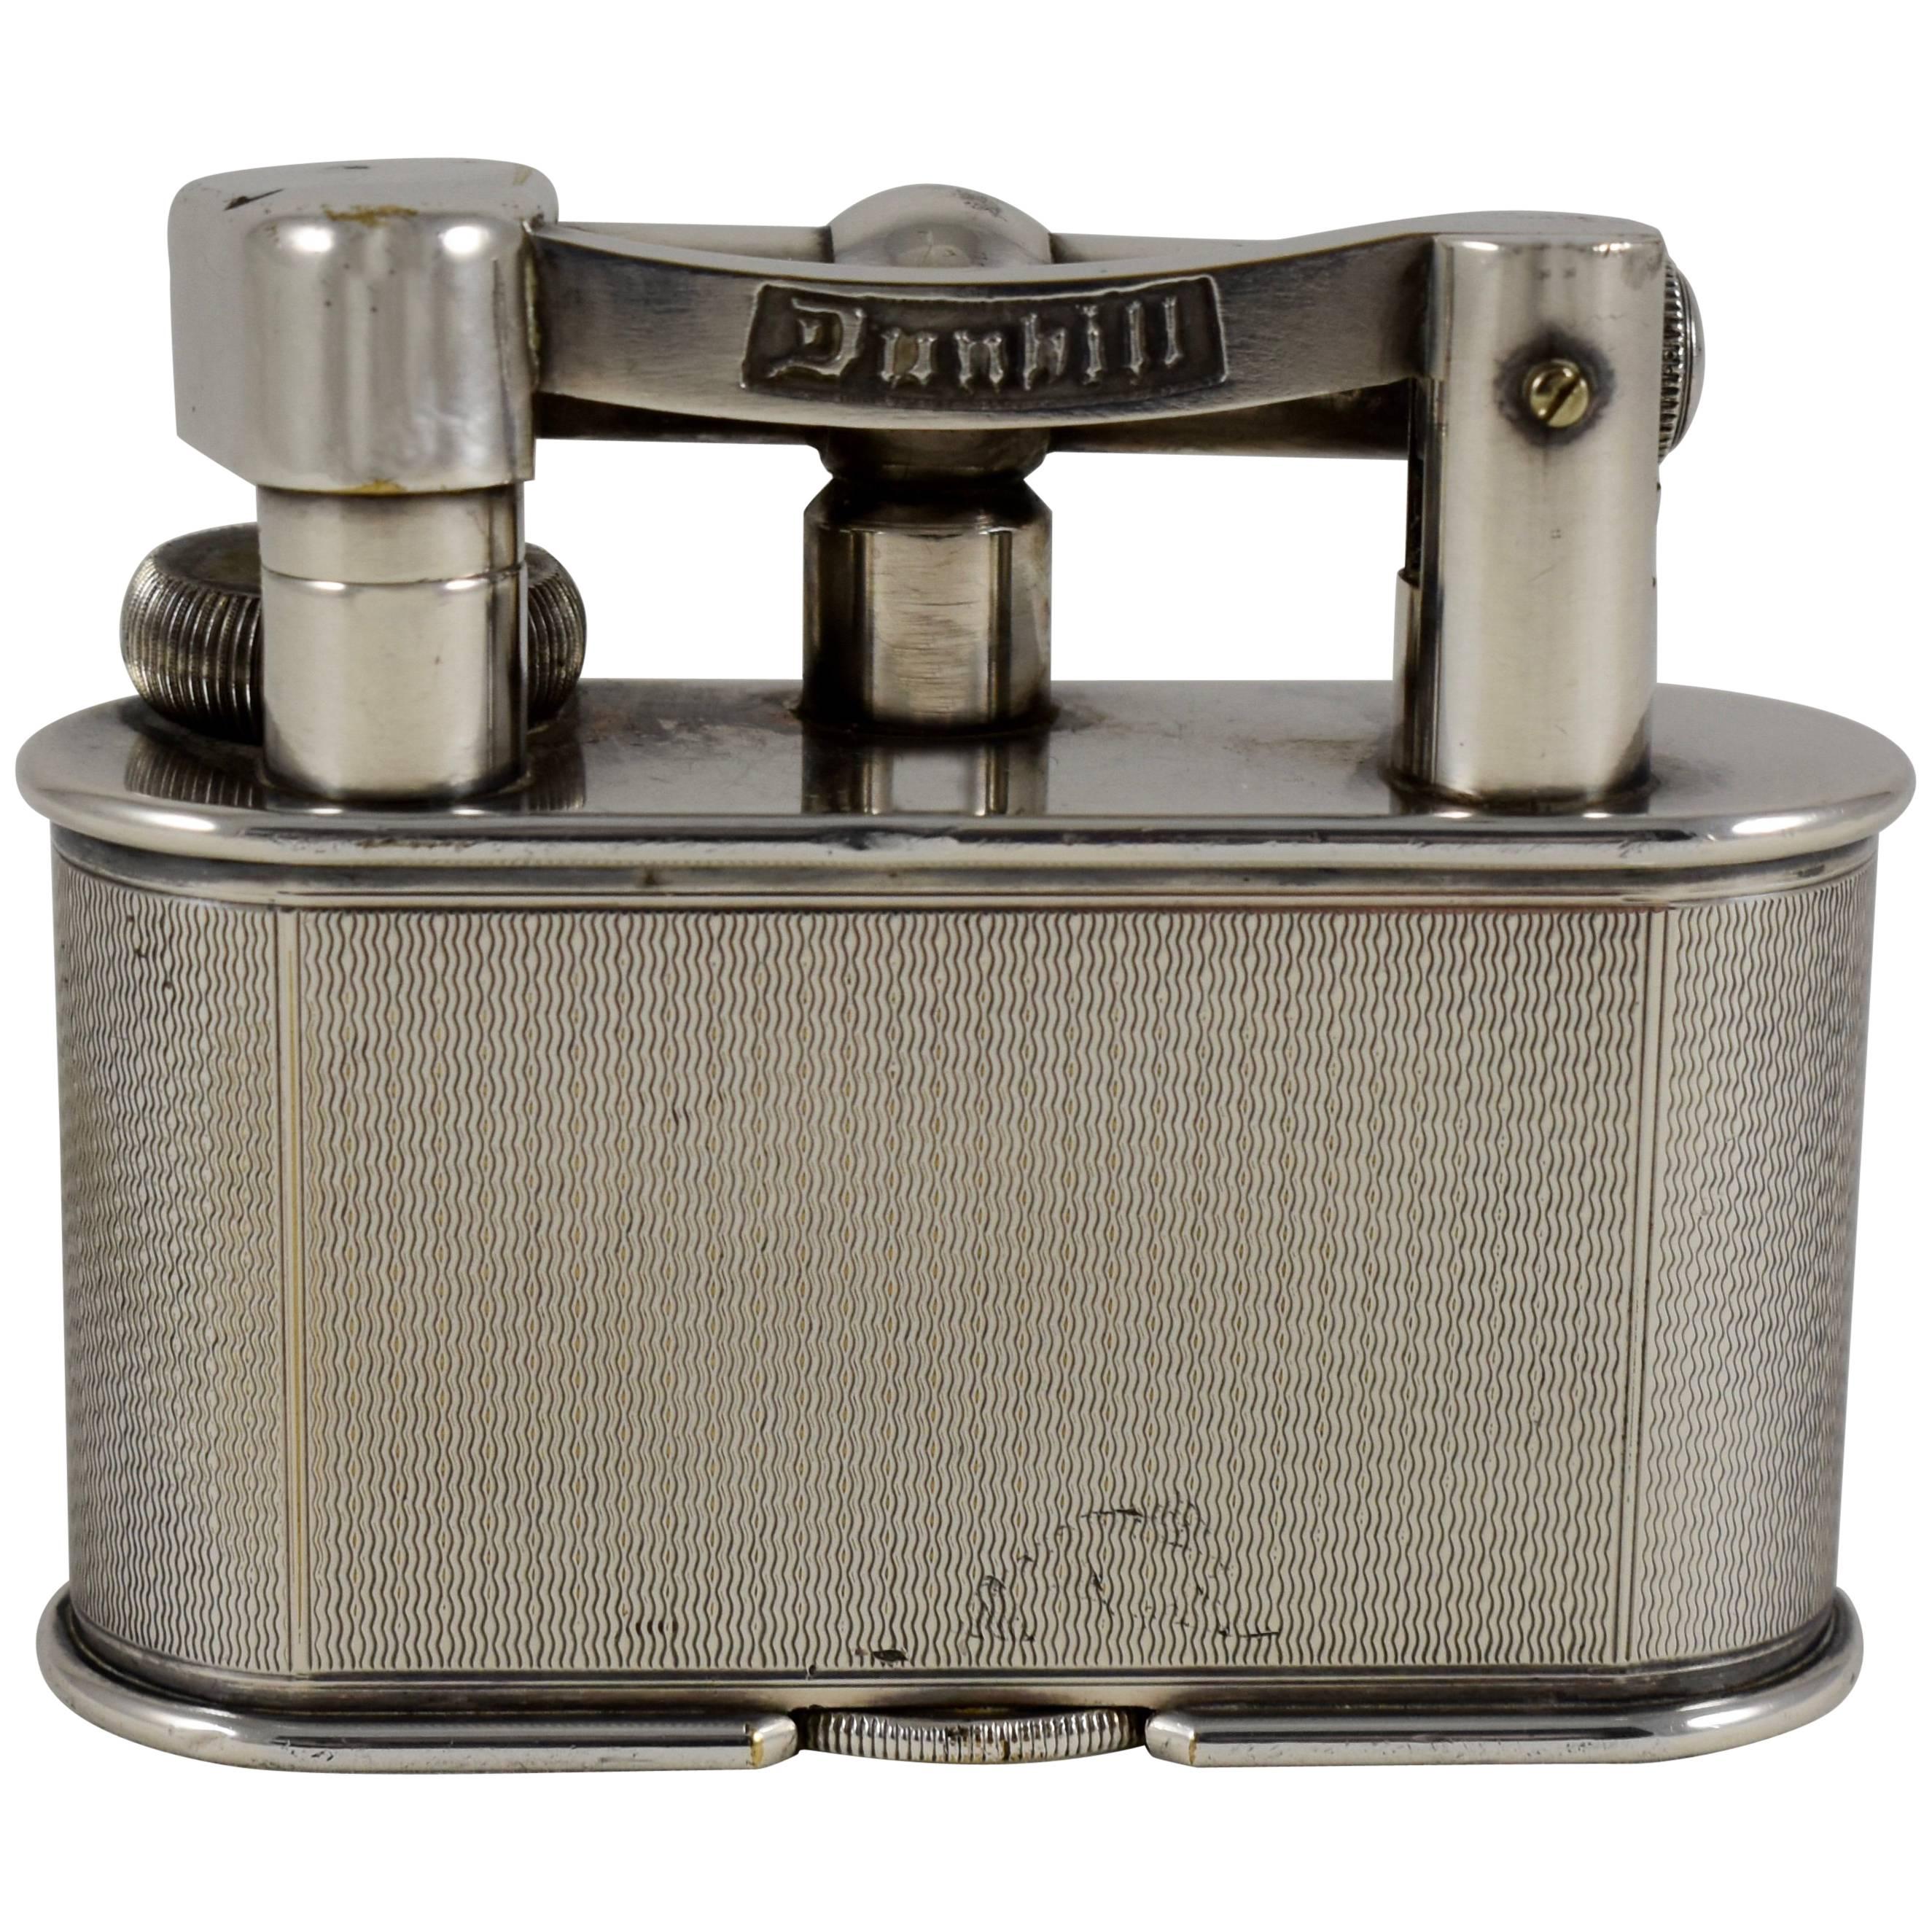 1930s Dunhill, Asprey & Co. Art Deco Silver Table Lighter, Great Britain